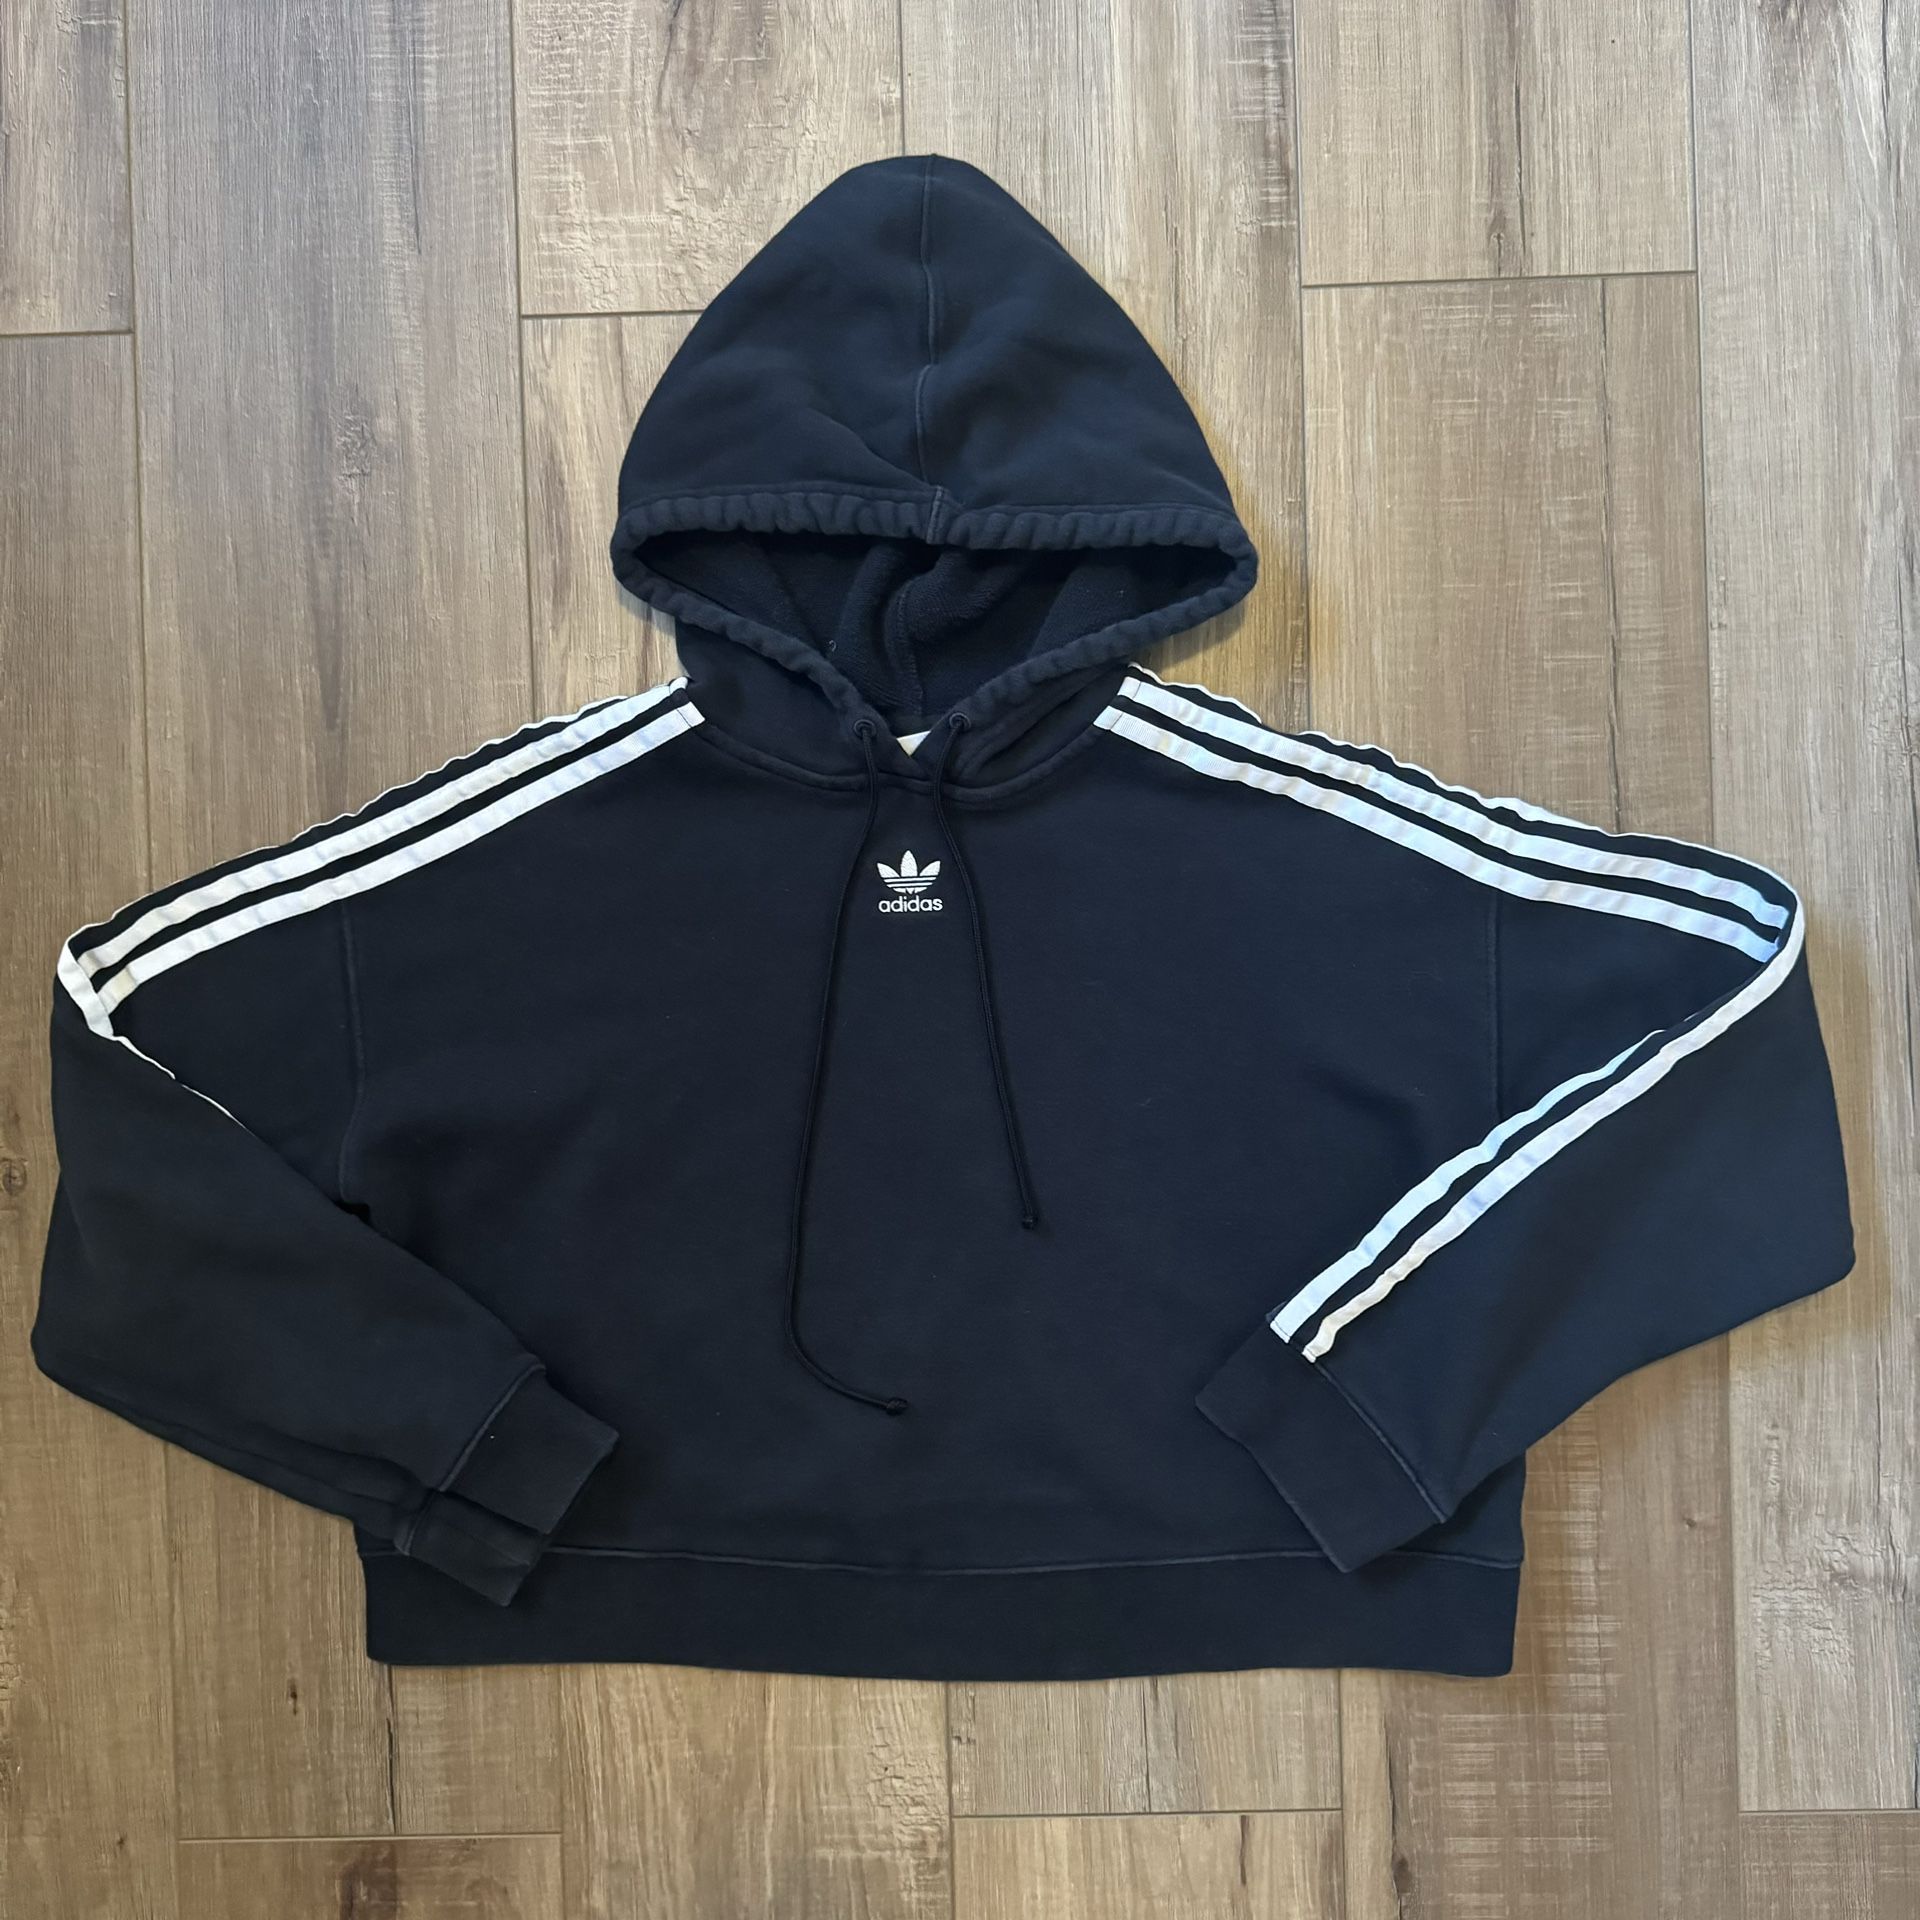 Adidas black cropped sweater